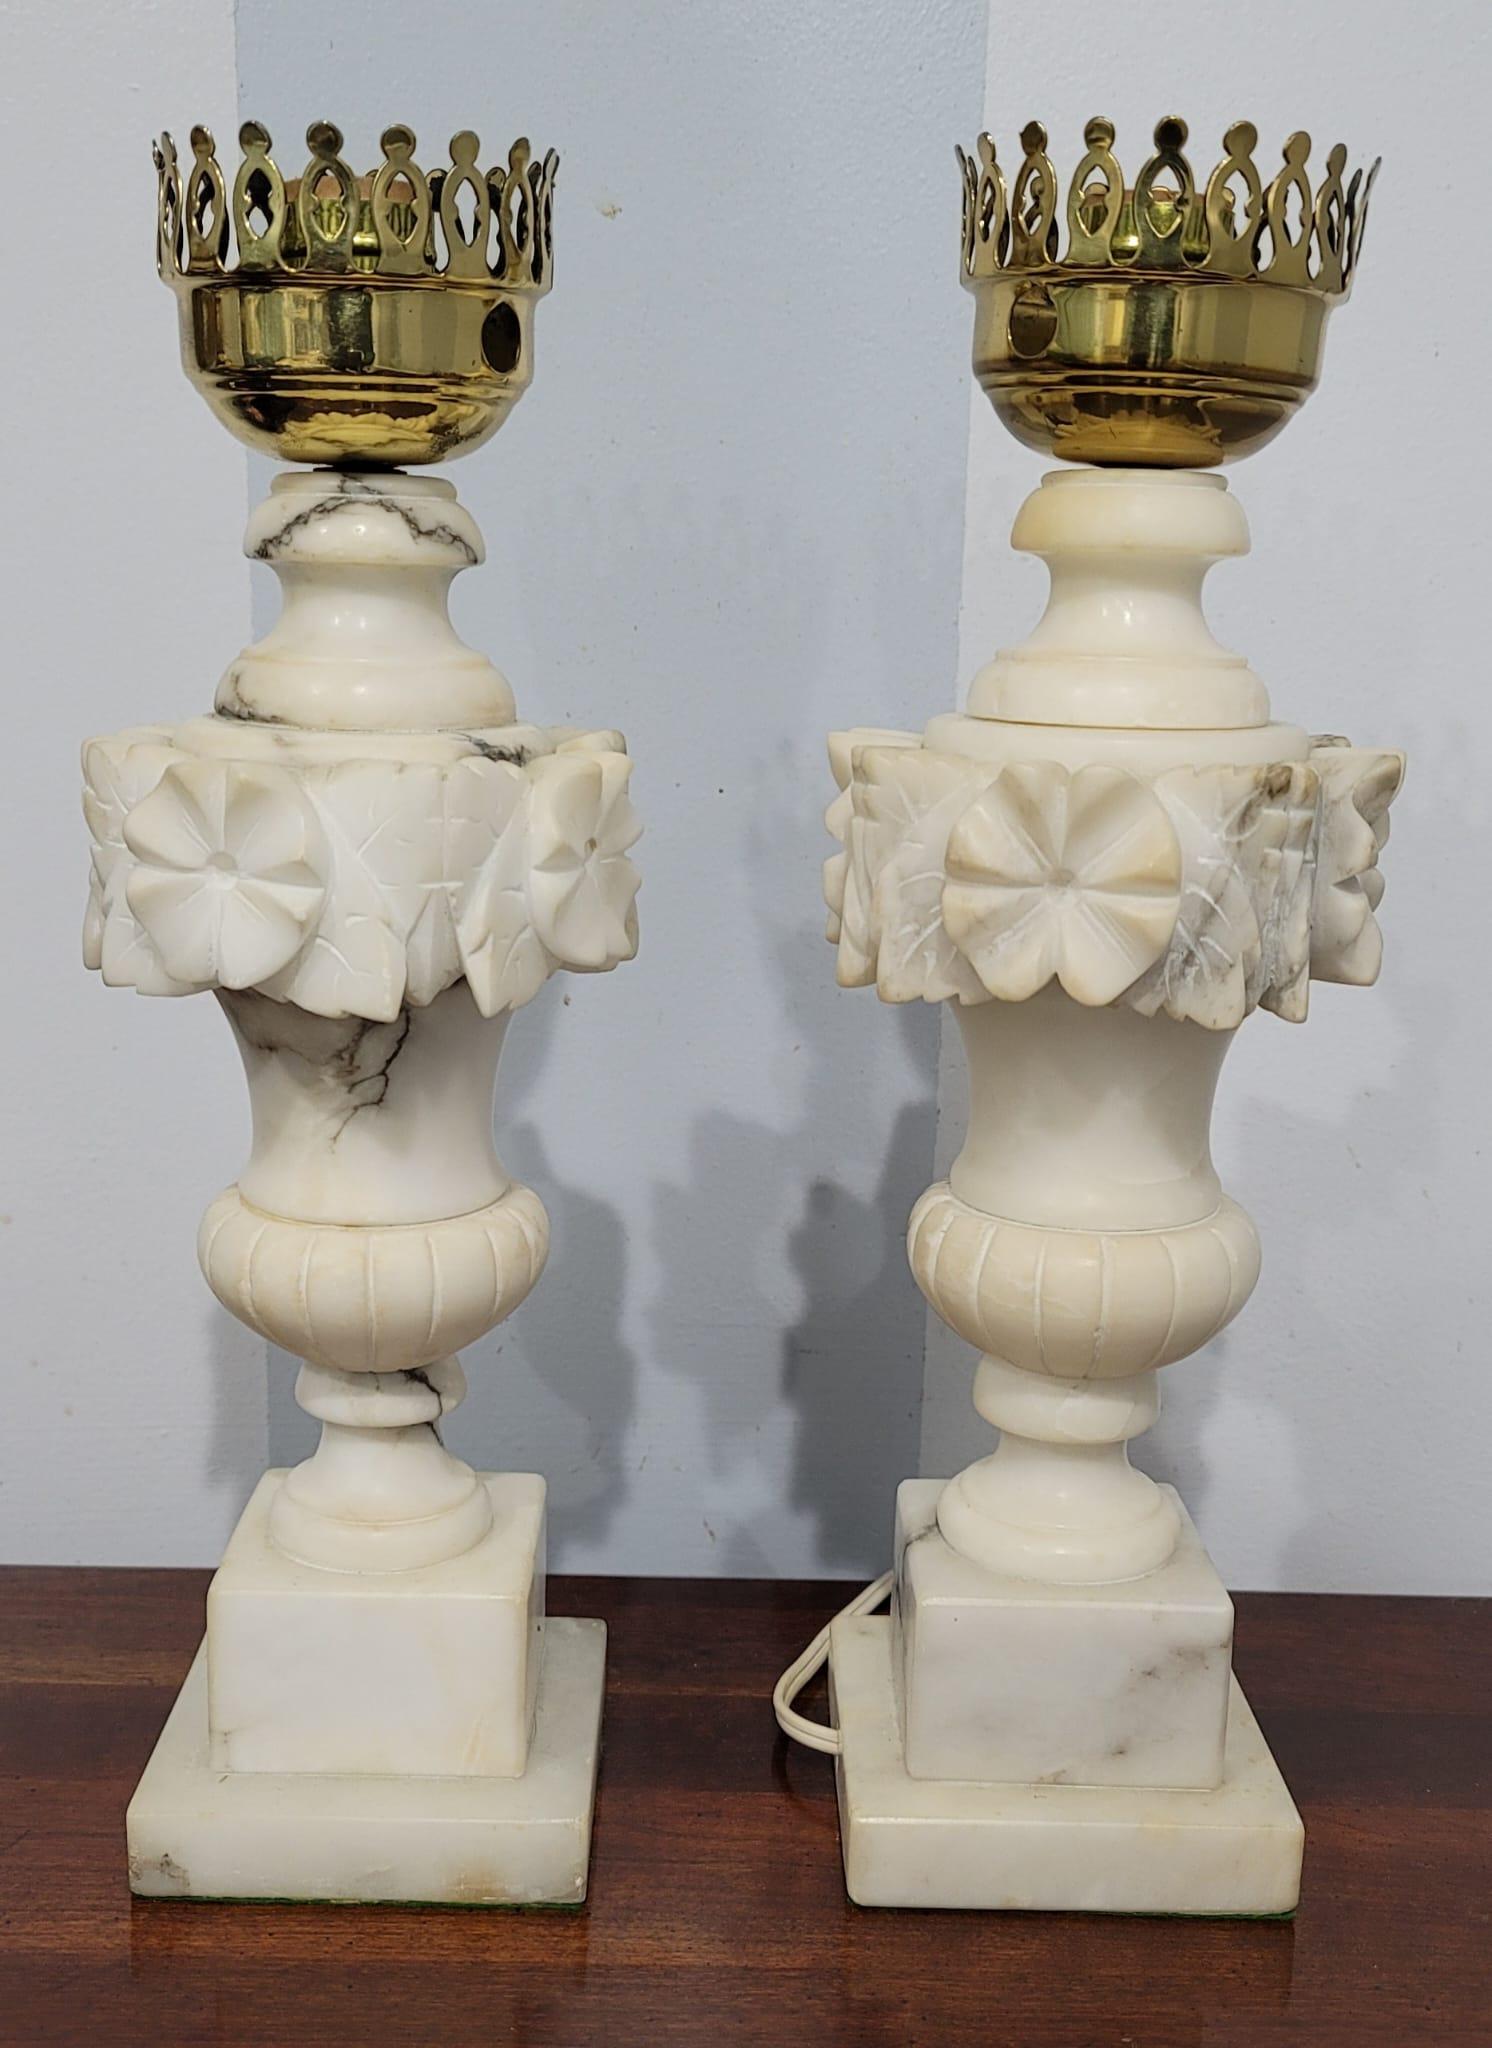 
A Pair of Vintage Italian Alabaster Marble Lantern Table Lamps, Circa 1960s
Felt line base. Measures 5